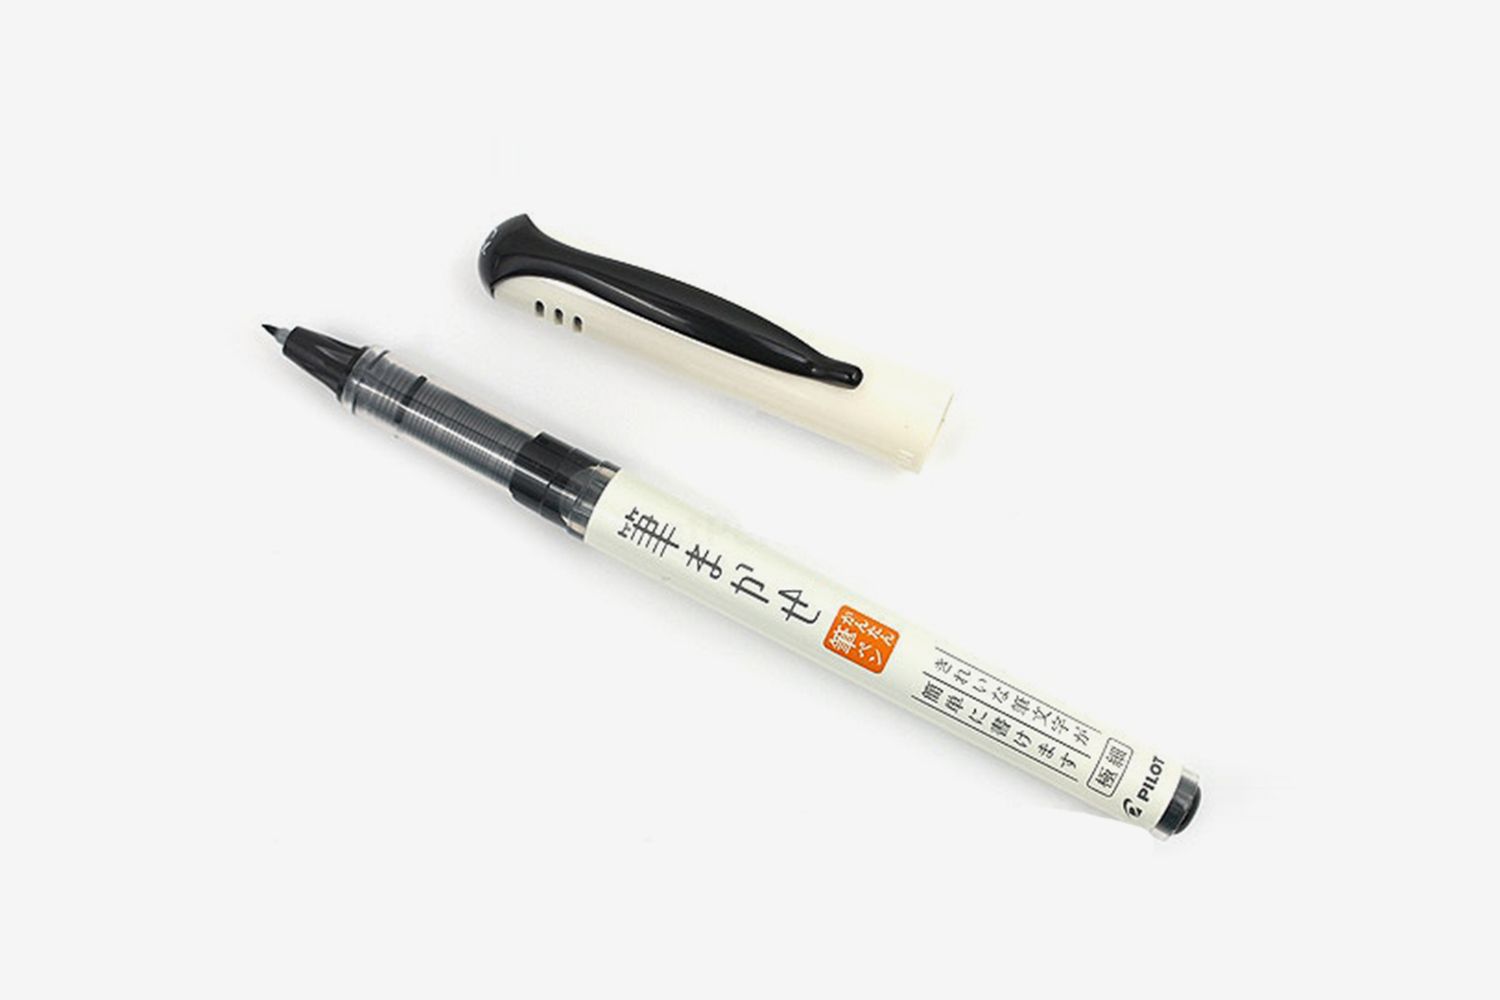 Fude-Makase Color Brush Pen